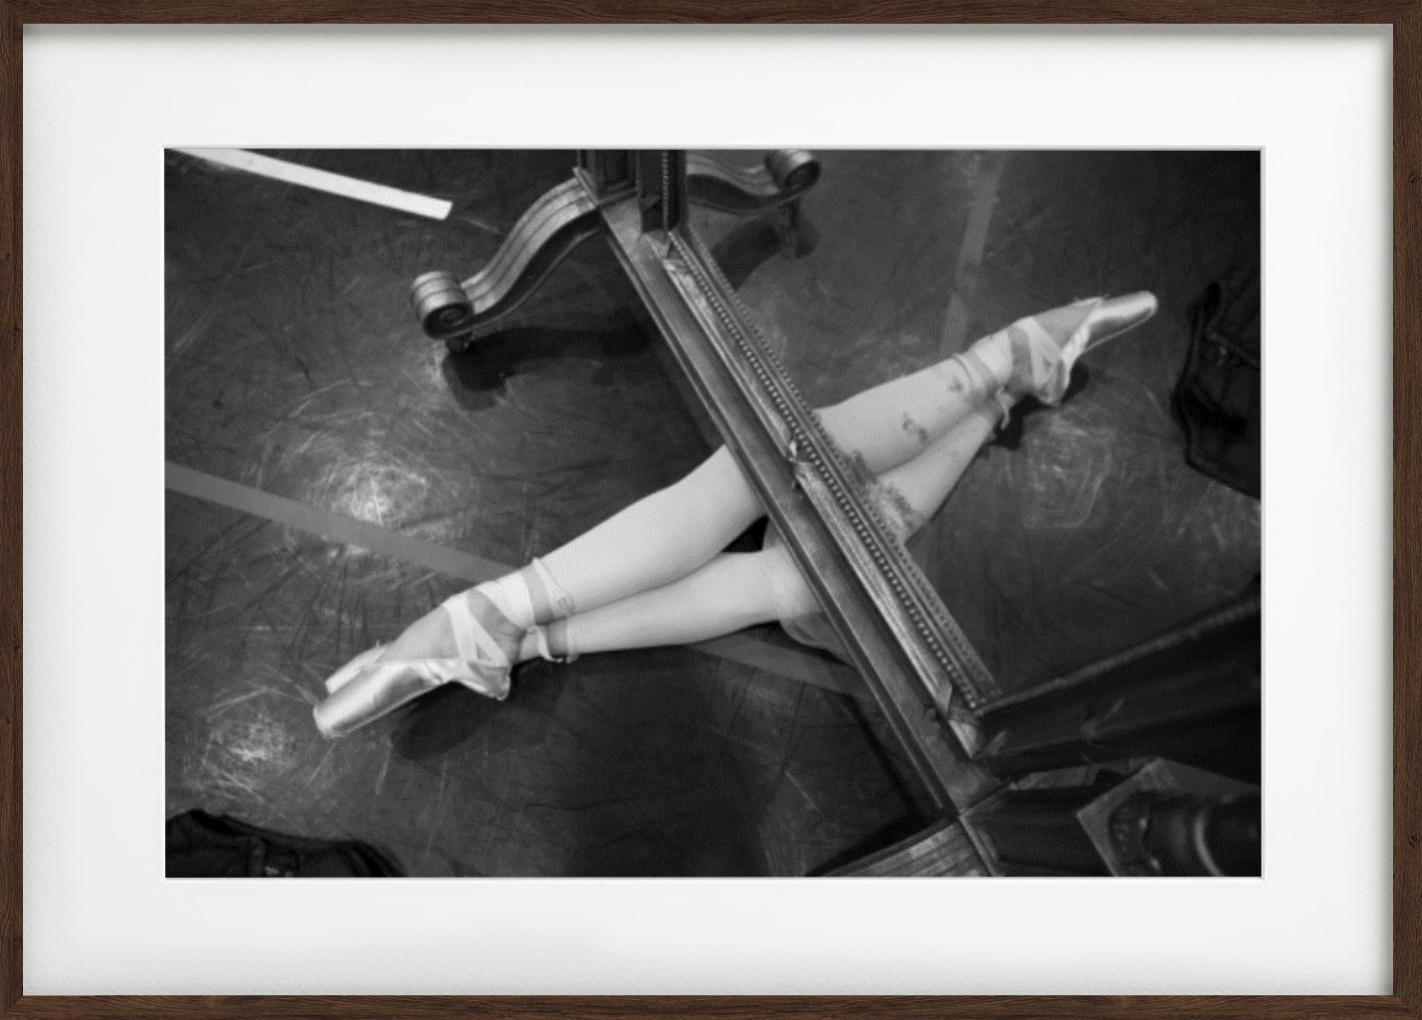 Piano Legs, Teatro Alla Scala Ballet Company - Ballet Shoes under a piano - Black Black and White Photograph by Gérard Uféras